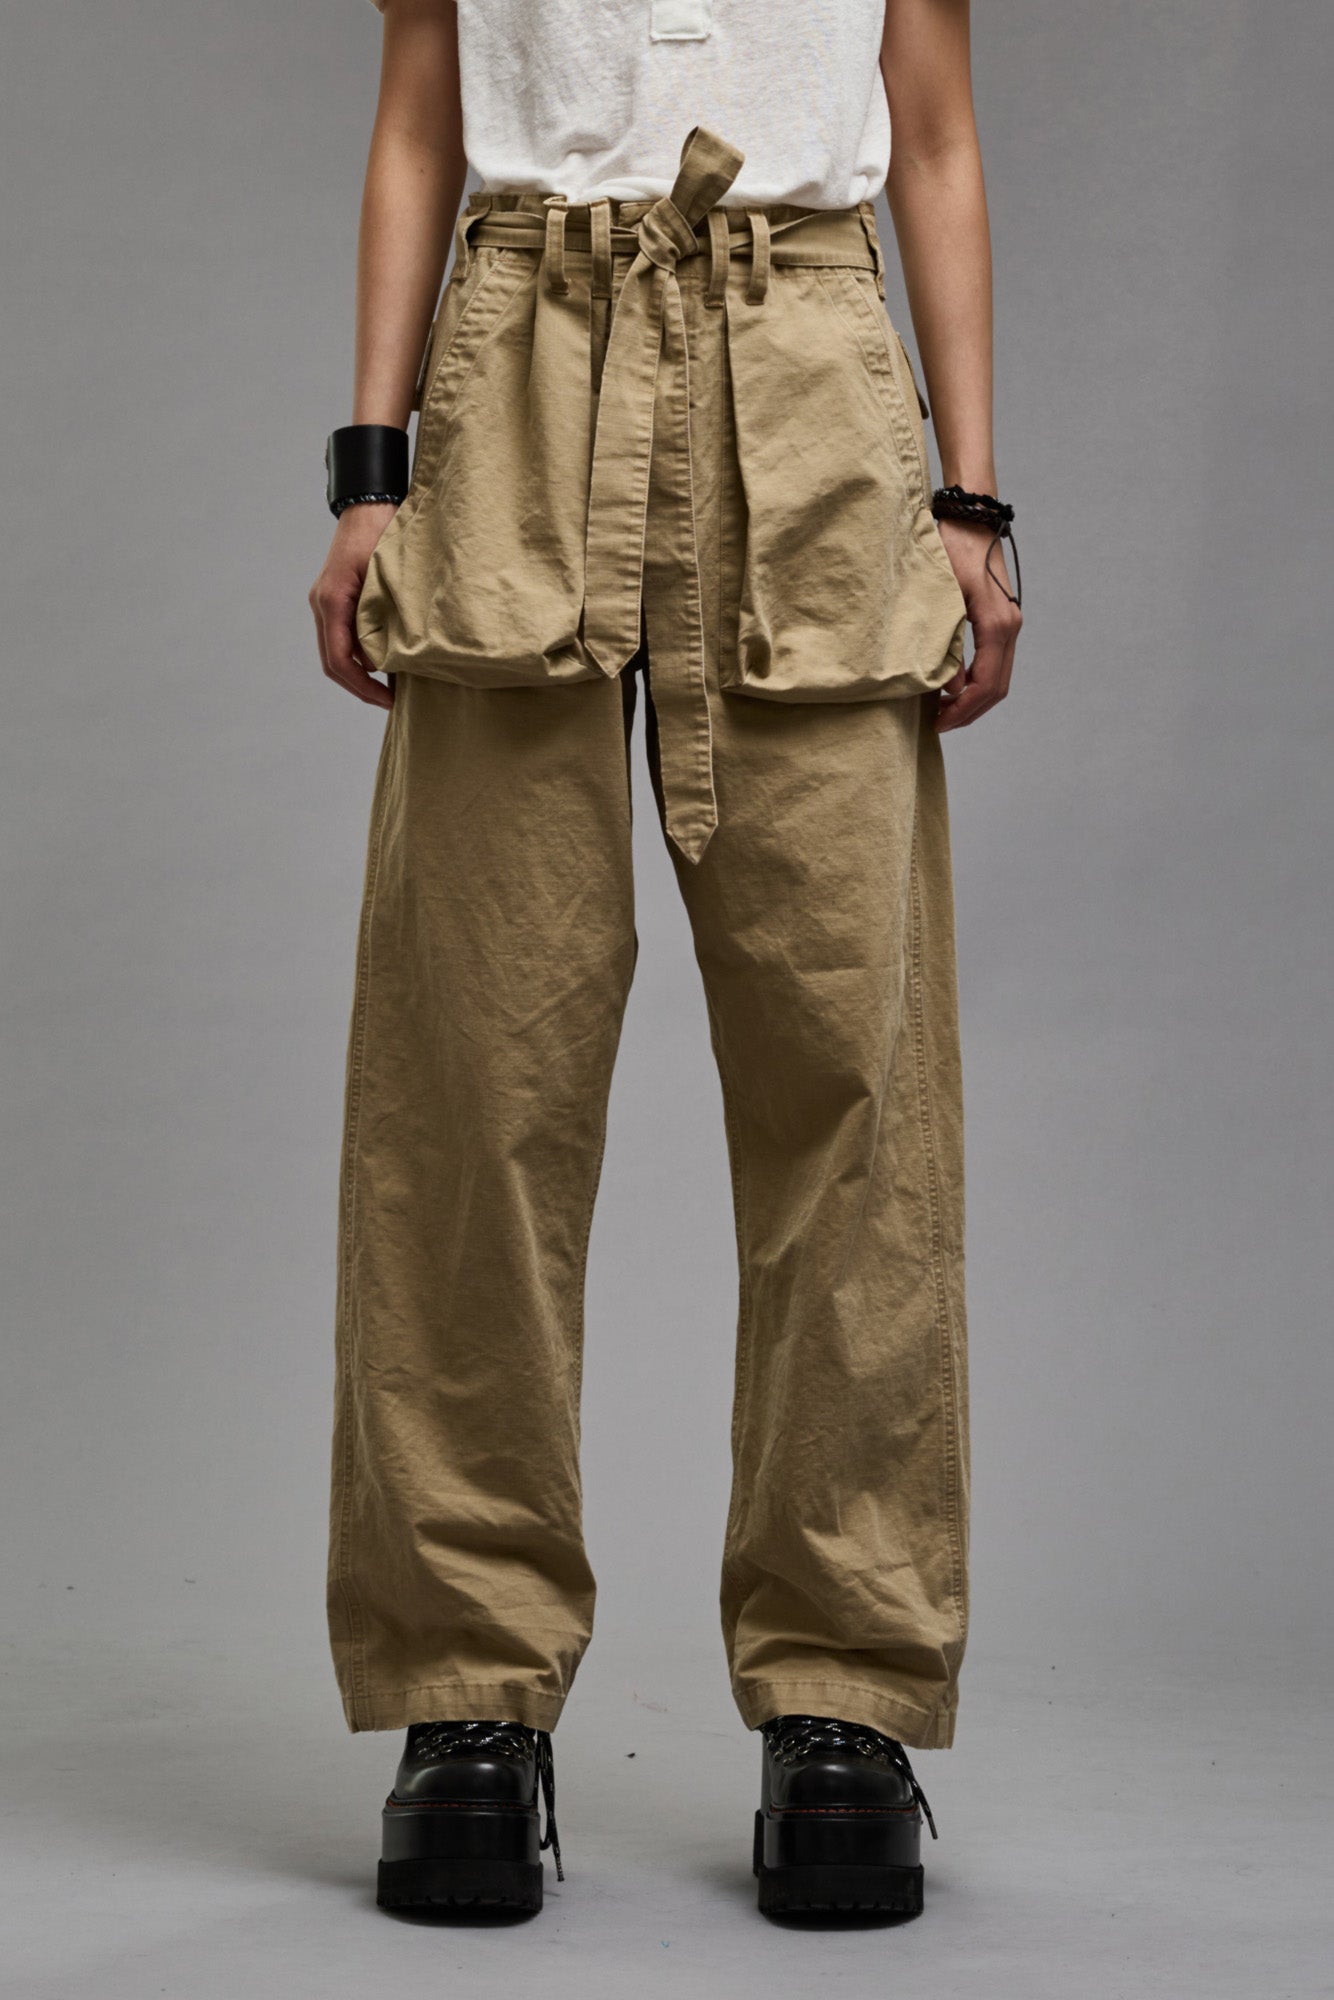 Ethnic Khaki Cargo Pants For Women Low Waist Baggy Cargo Trousers